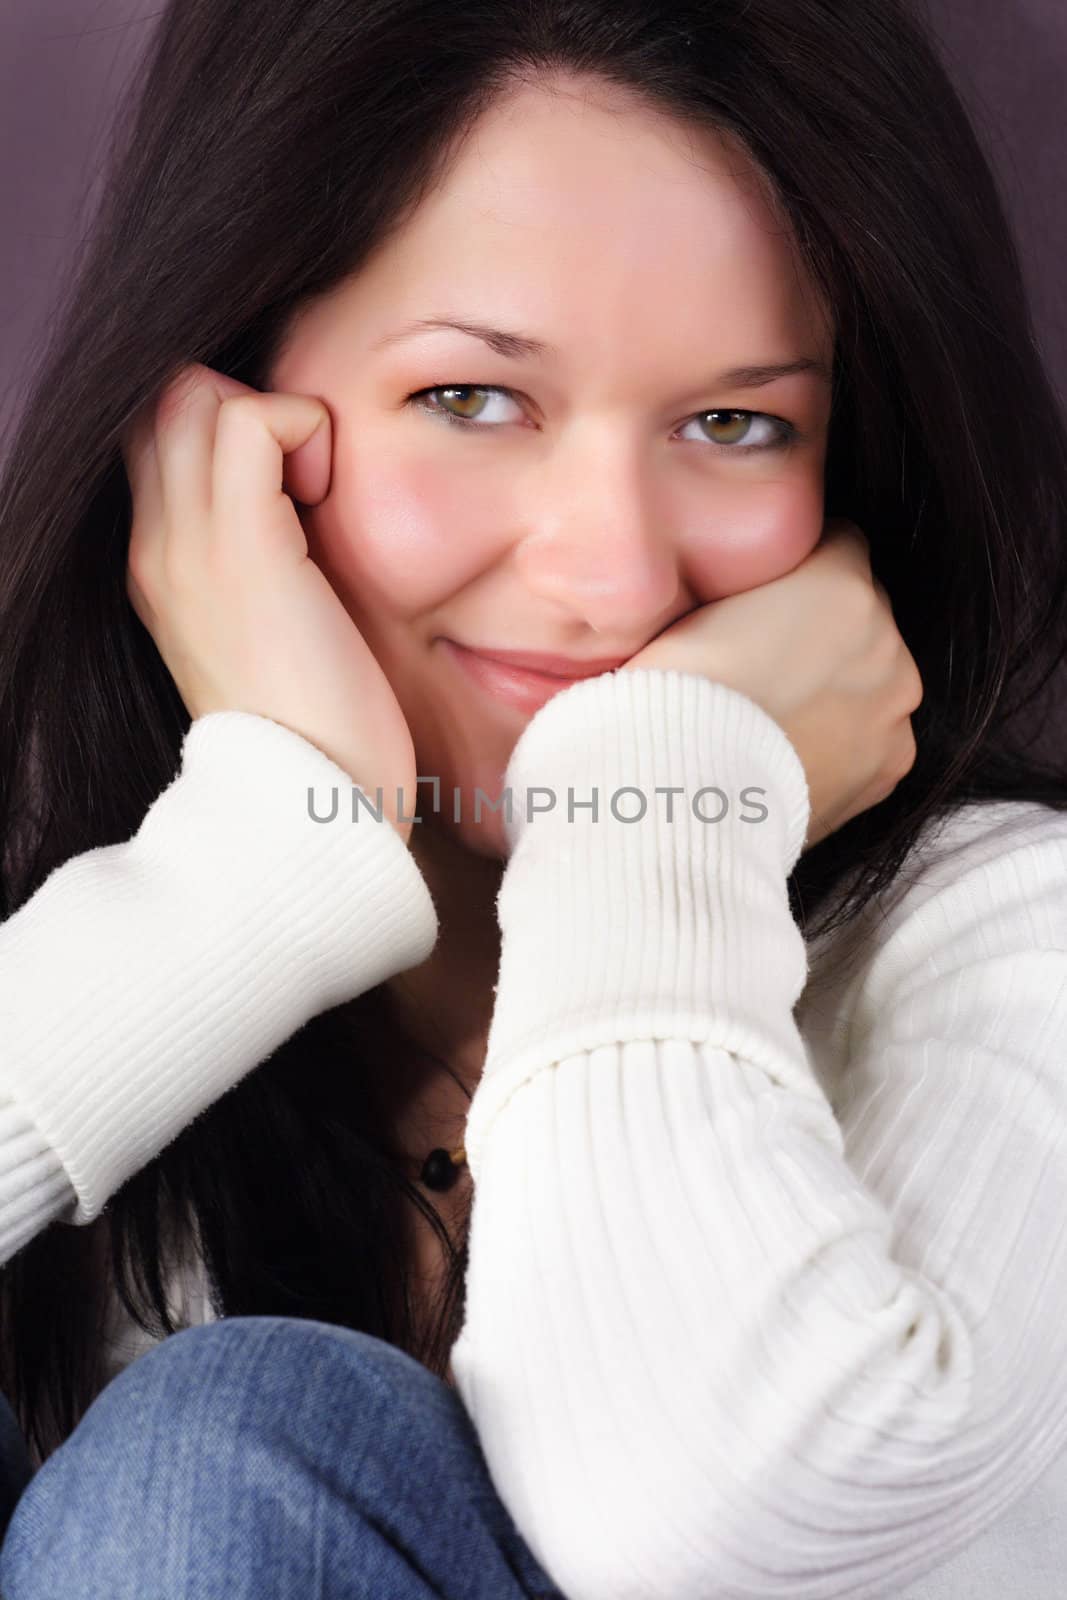 Close-up portrait of happy smiling woman